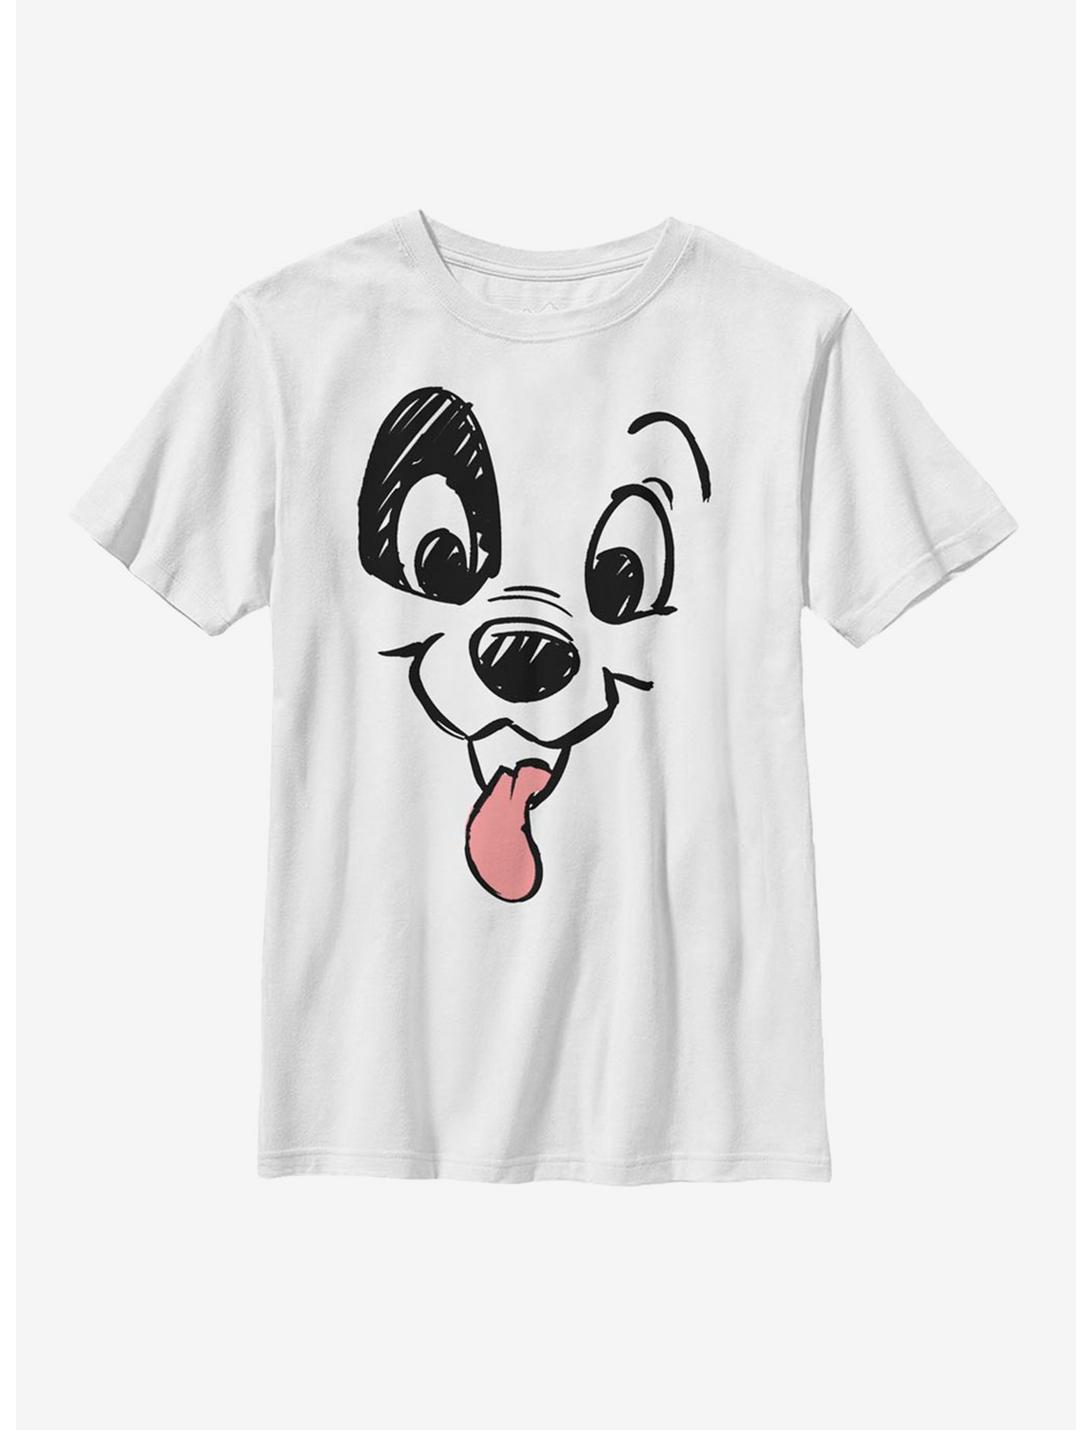 Disney 101 Dalmatians Patch Big Face Youth T-Shirt, WHITE, hi-res